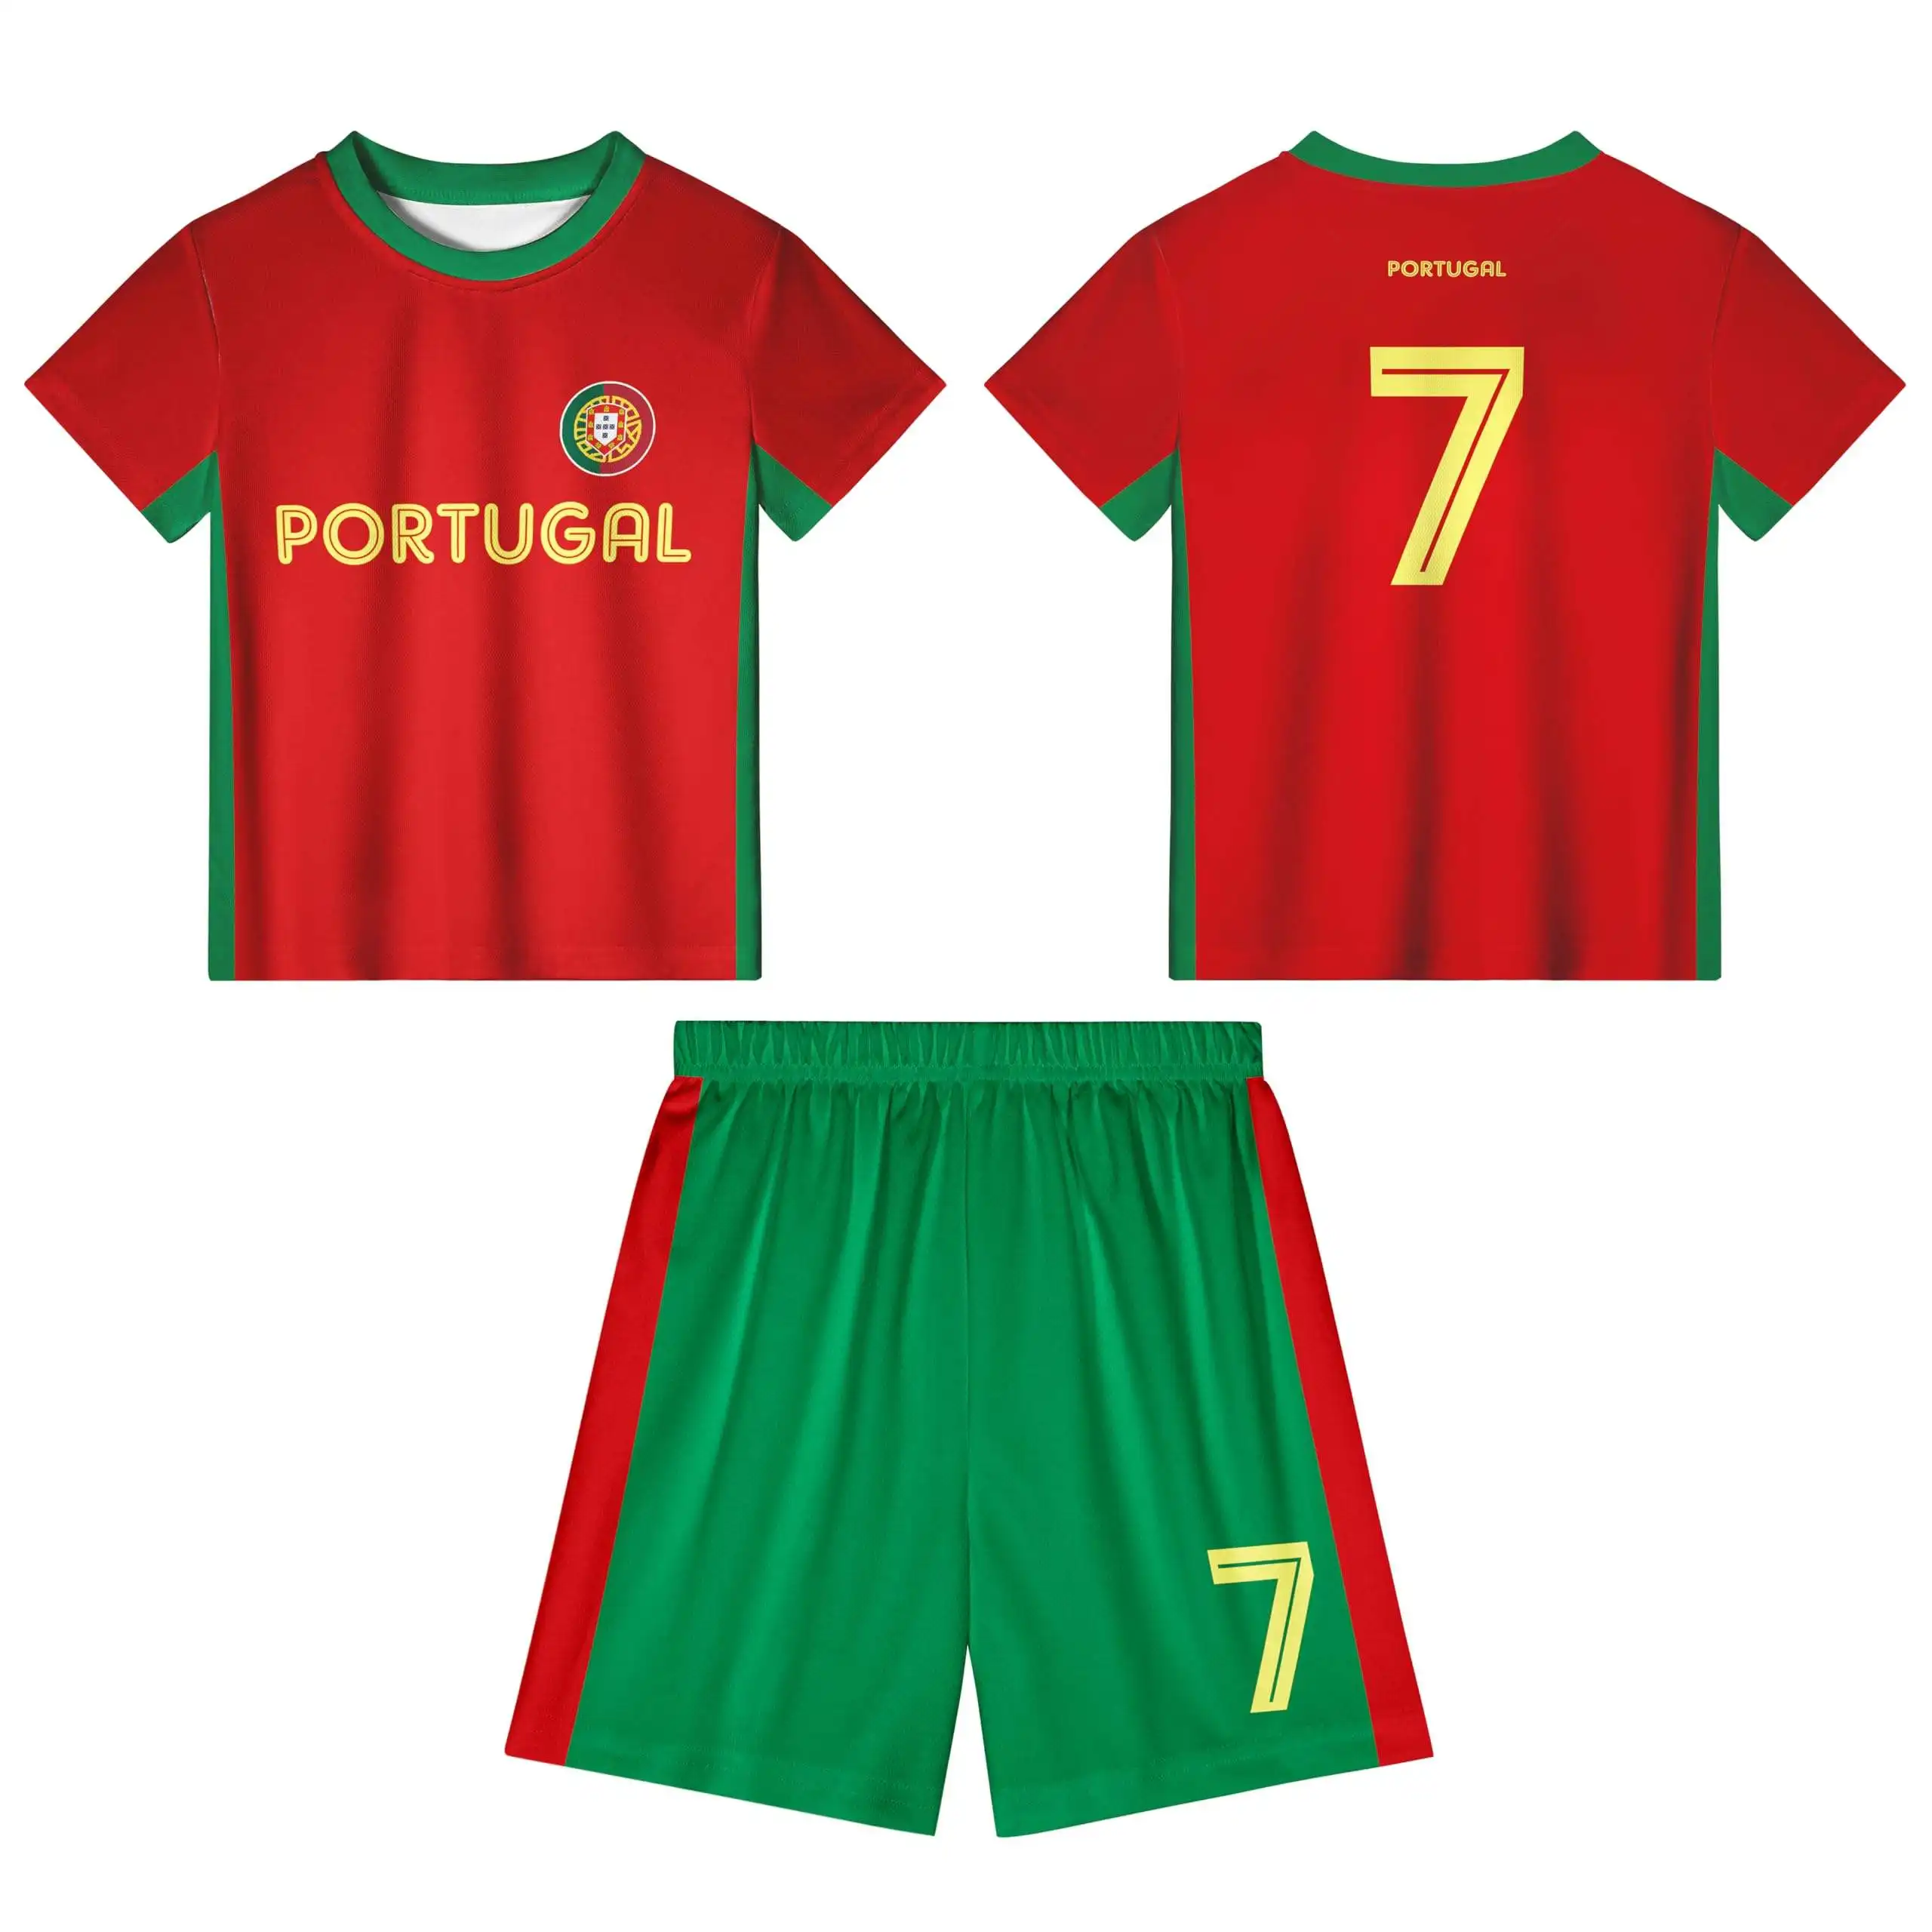 Print On Demand Portugal Trainings anzug Sporta nzug Großhandels preis Kinder Jugend Komfort Atmungsaktives Fußball trikot Fußball uniform Heiß